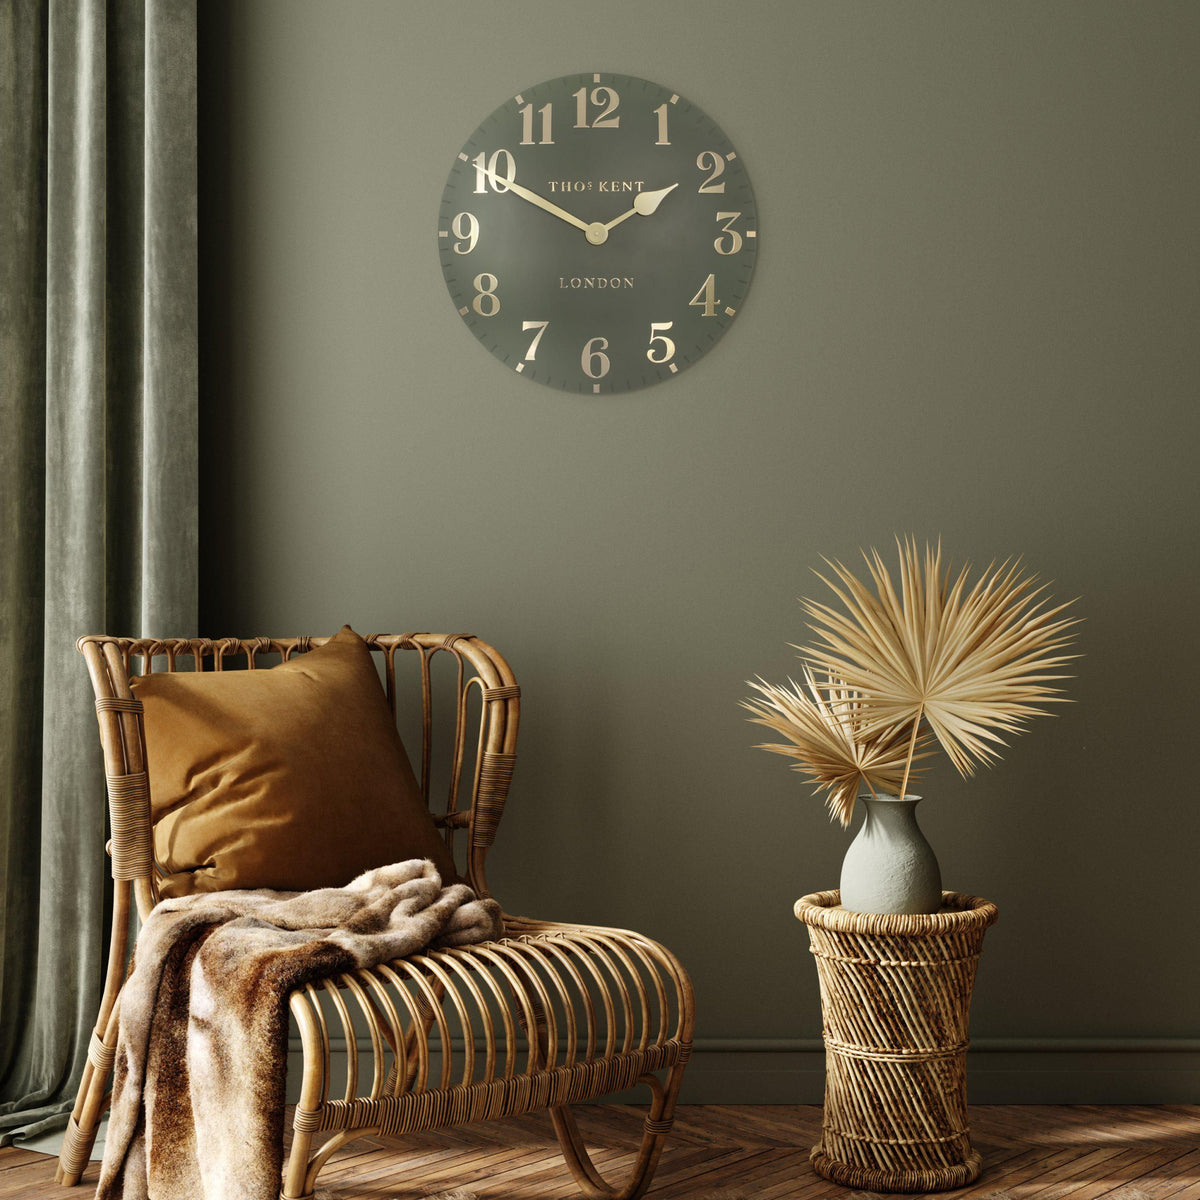 20 Inch Arabic Lichen Green Wall Clock